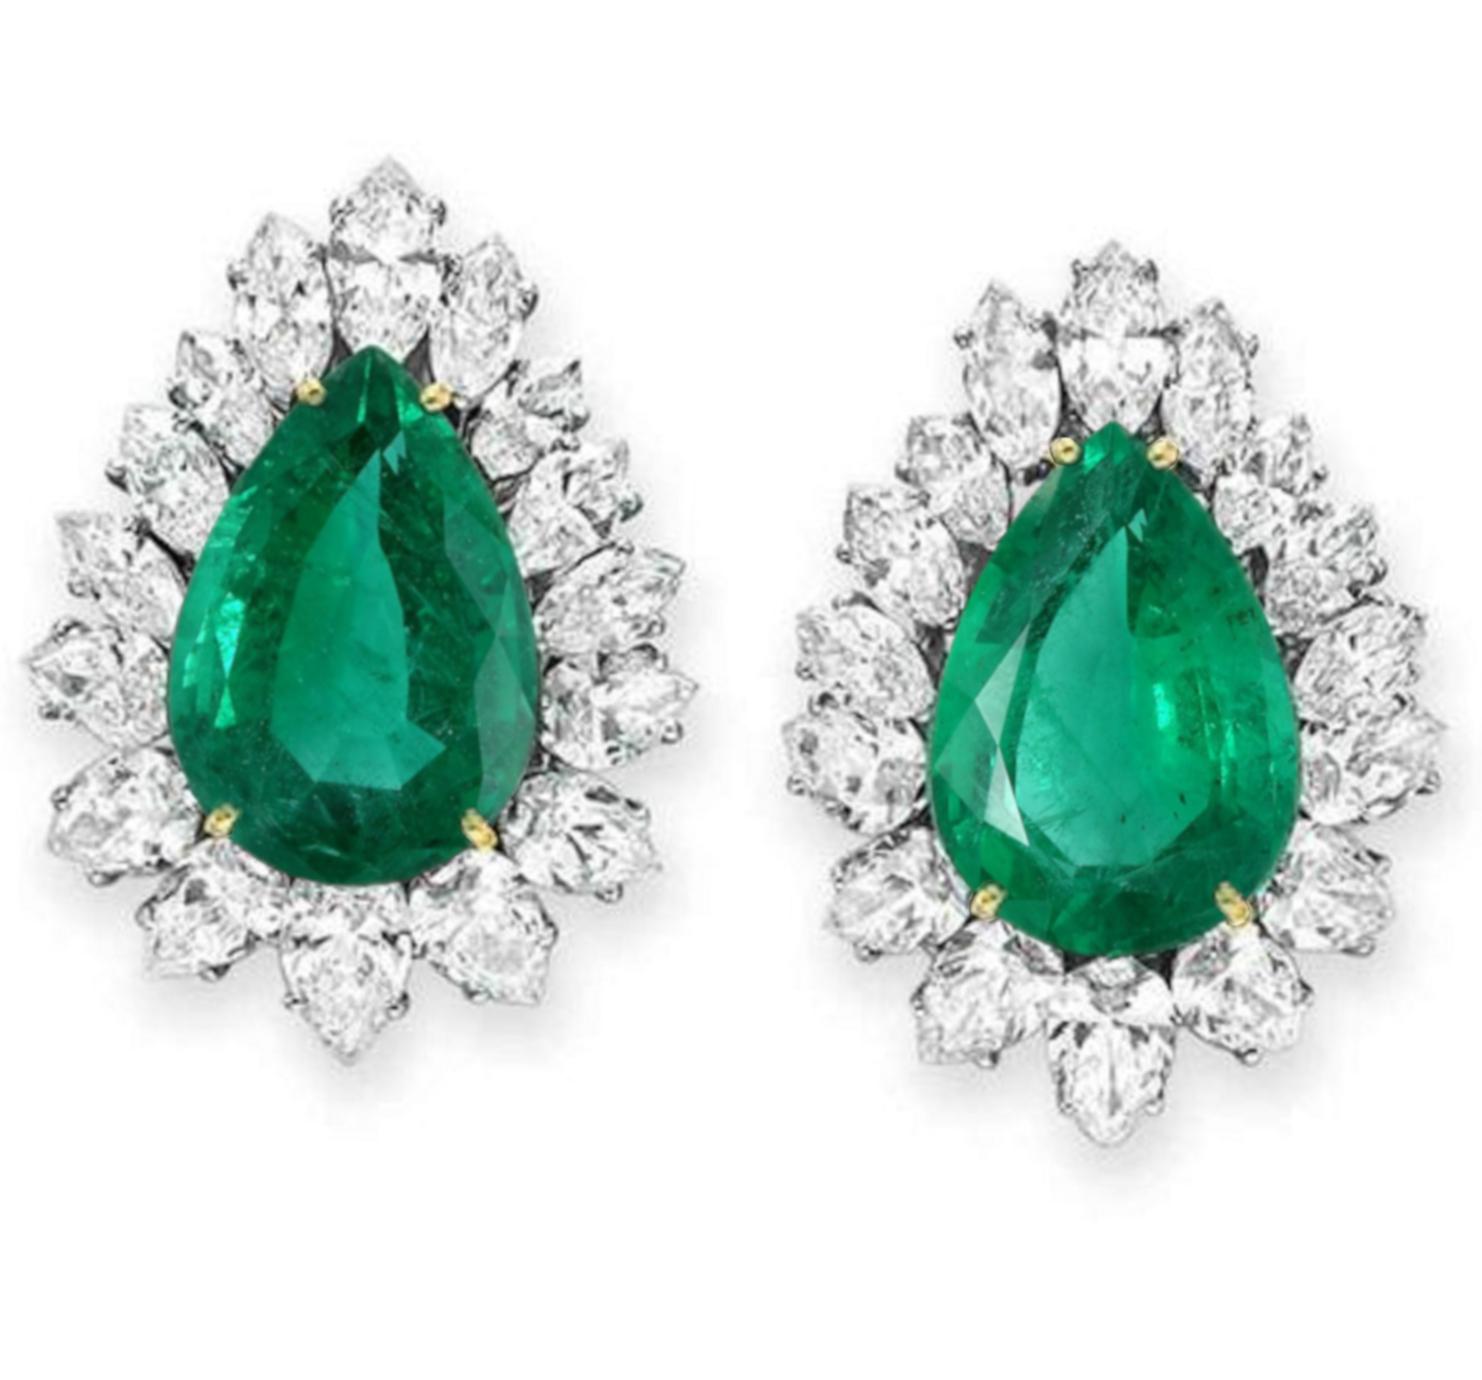 Modern GIA and AGL Certified 24.54 Carat Pear Cut Emeralds Earrings